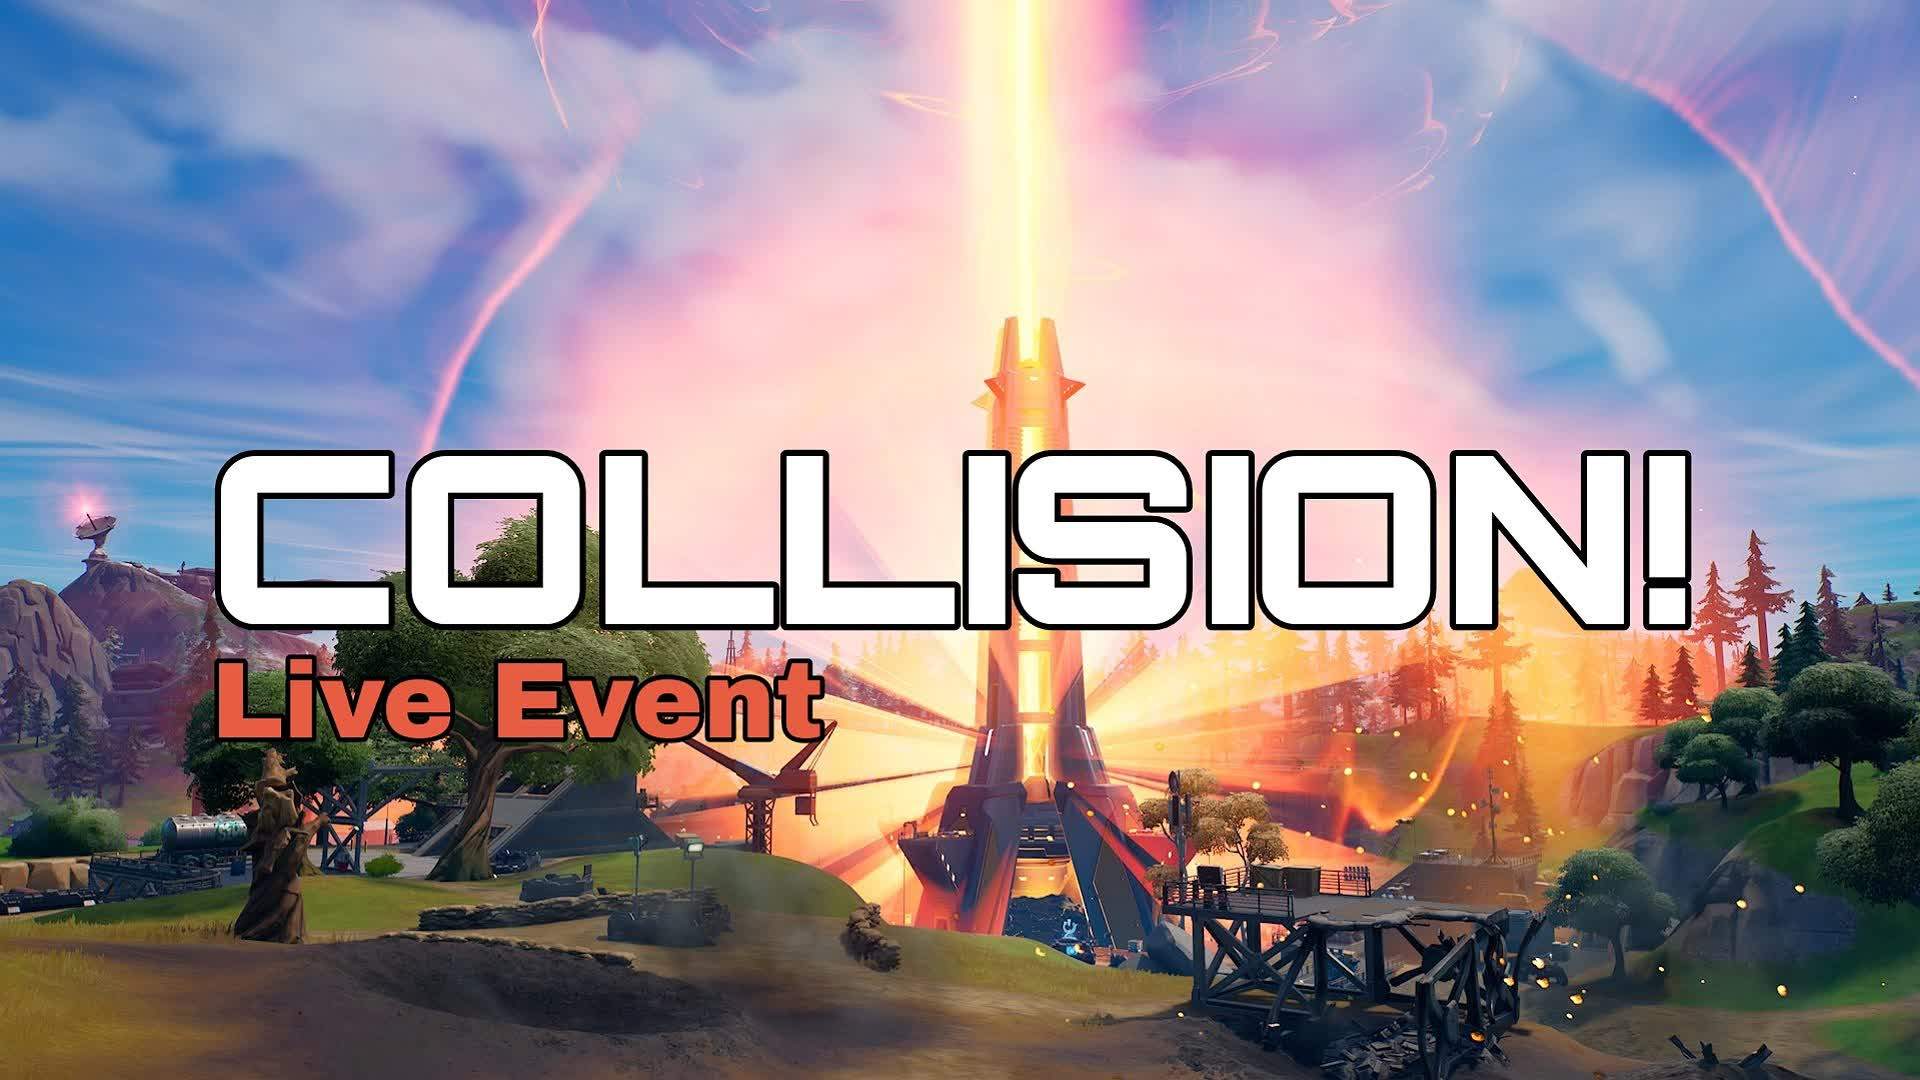 COLLISION! - LIVE EVENT 7976-3551-8804